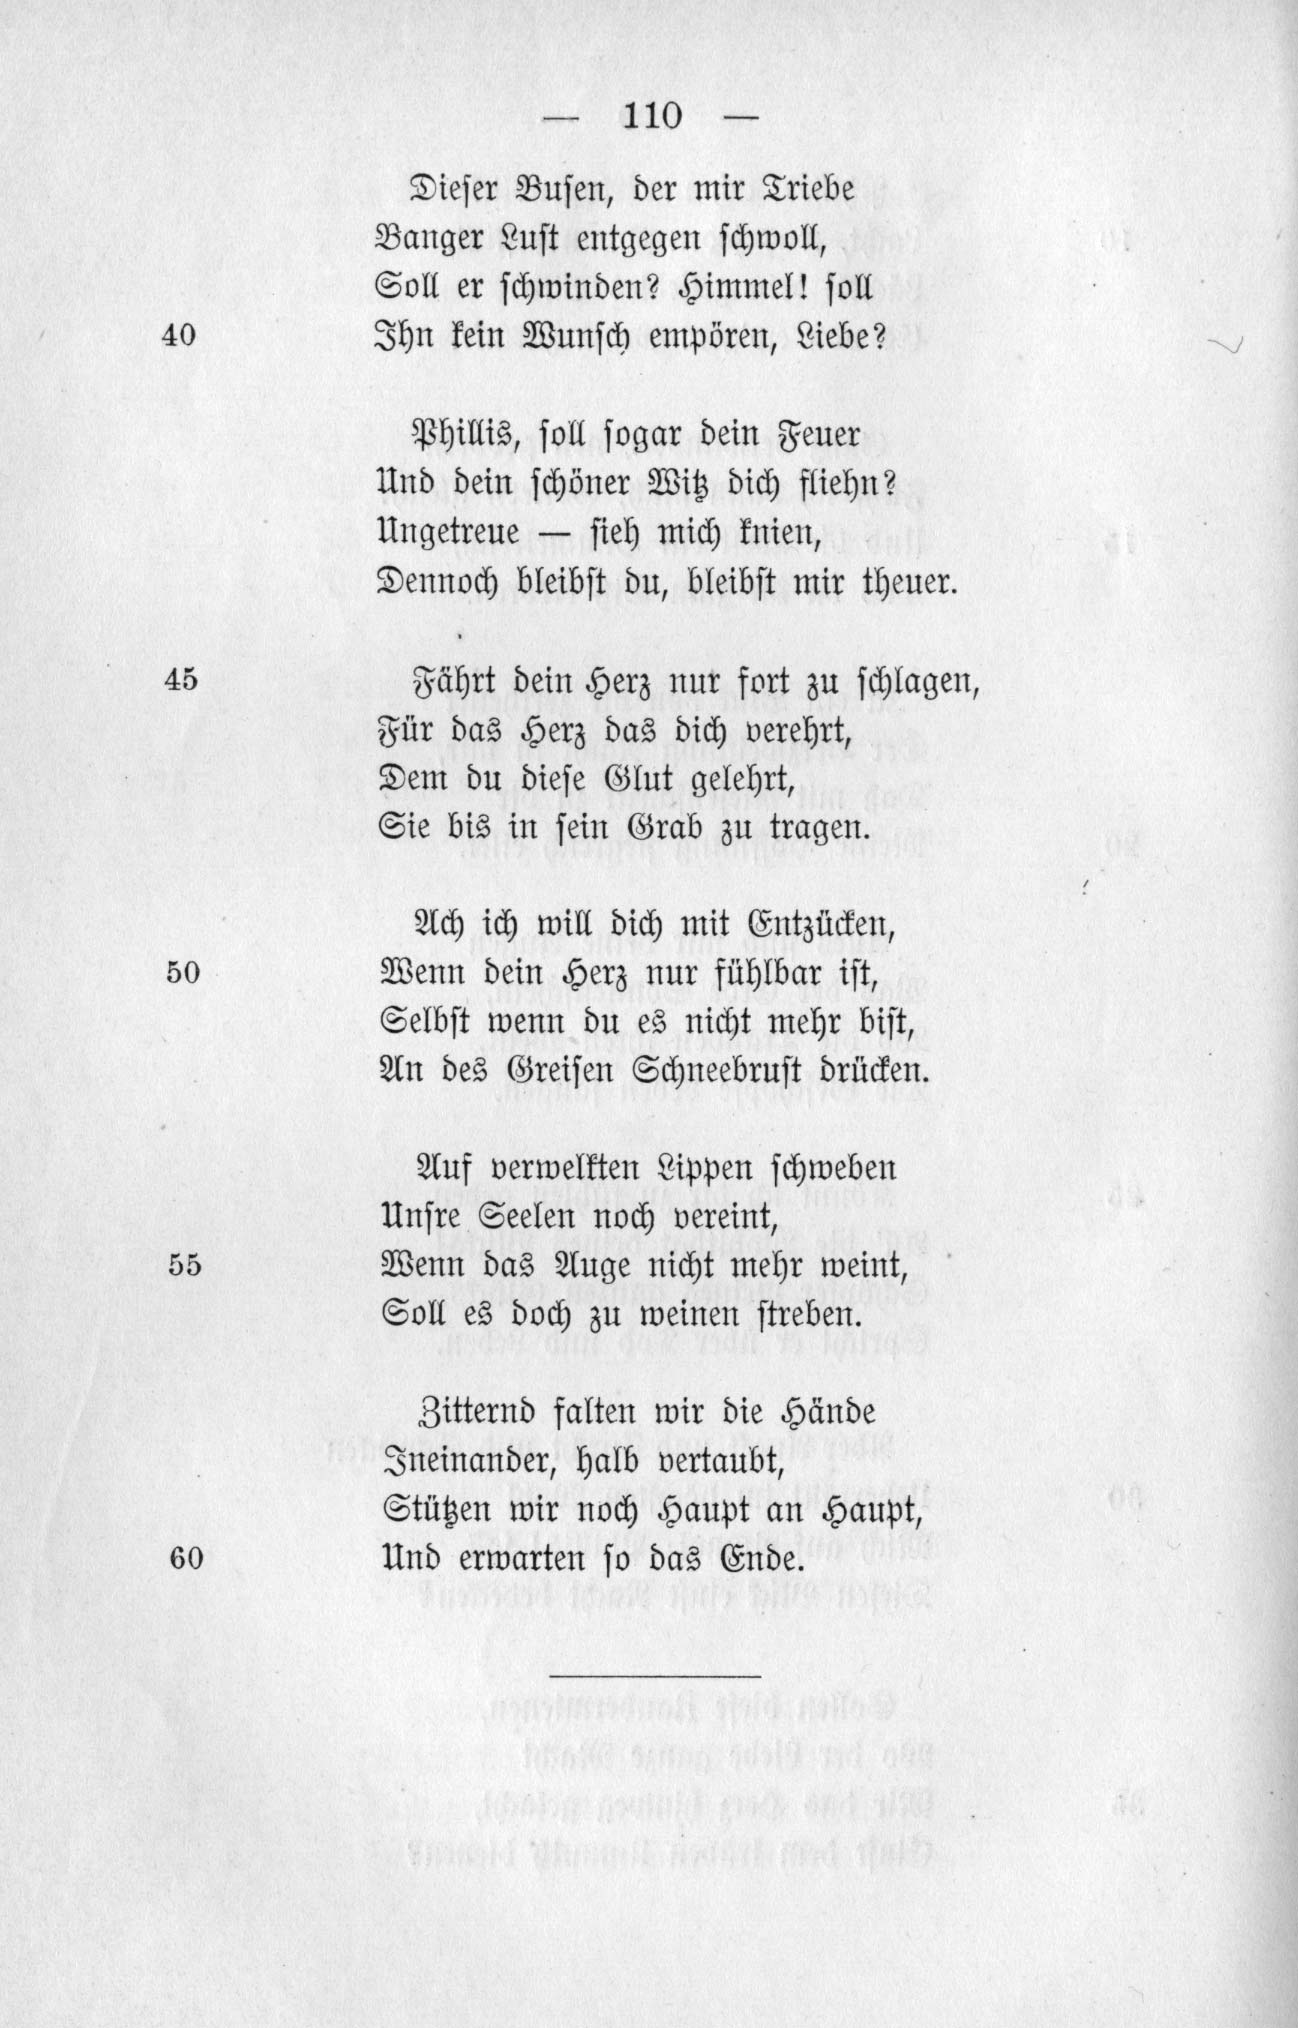 File Gedichte Von Jmr Lenz 126 Jpg Wikimedia Commons